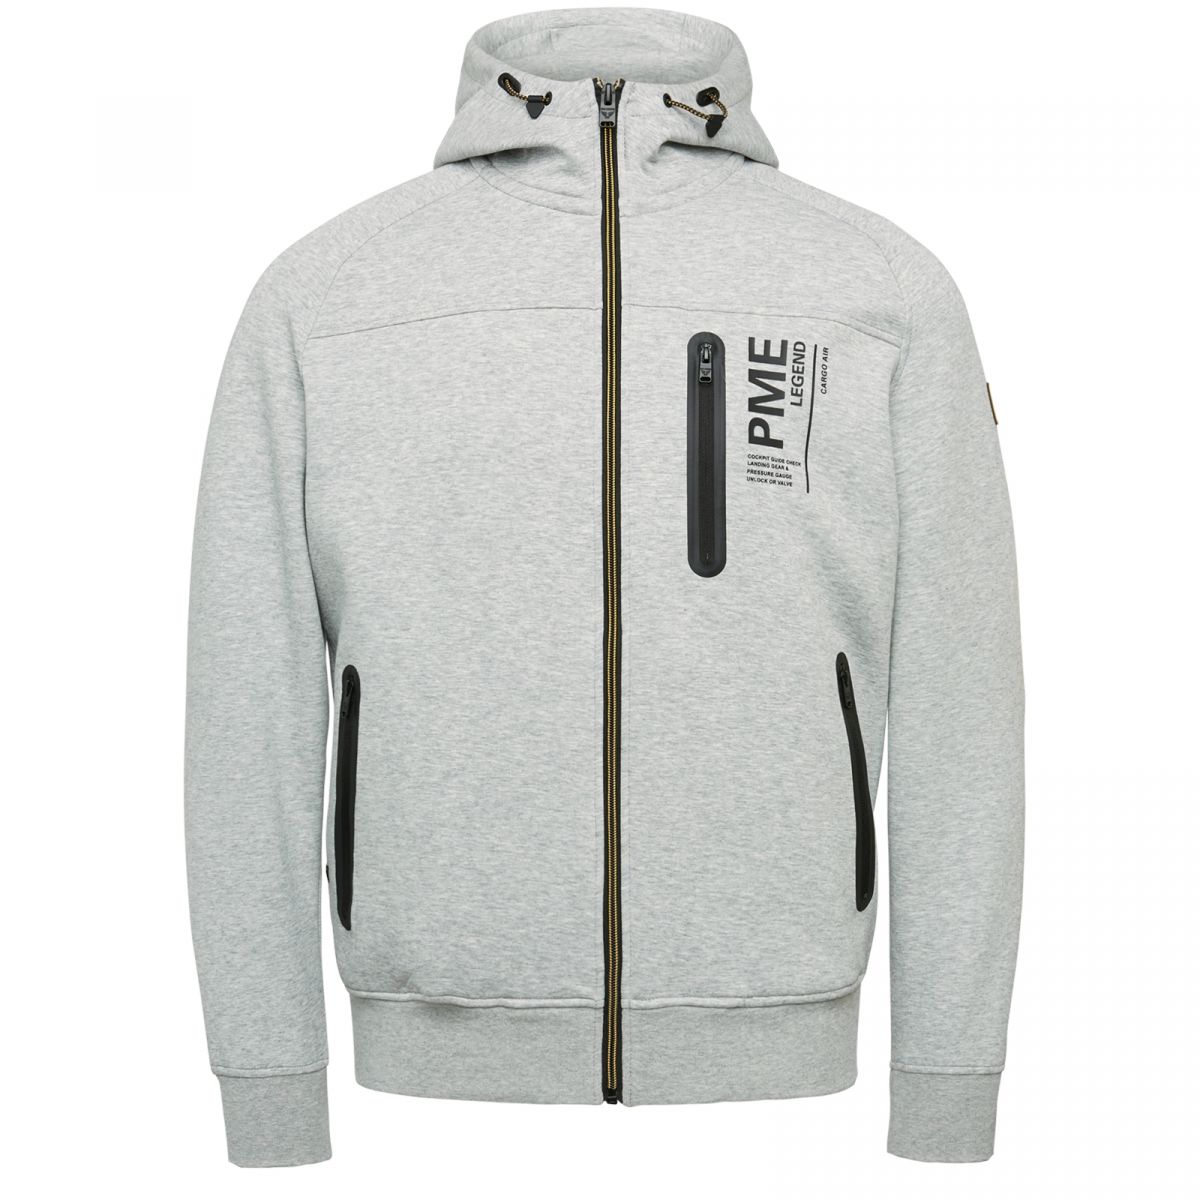 peper Twinkelen Reinig de vloer PME Legend Sweat jacket with hood - gray (Grey) - L